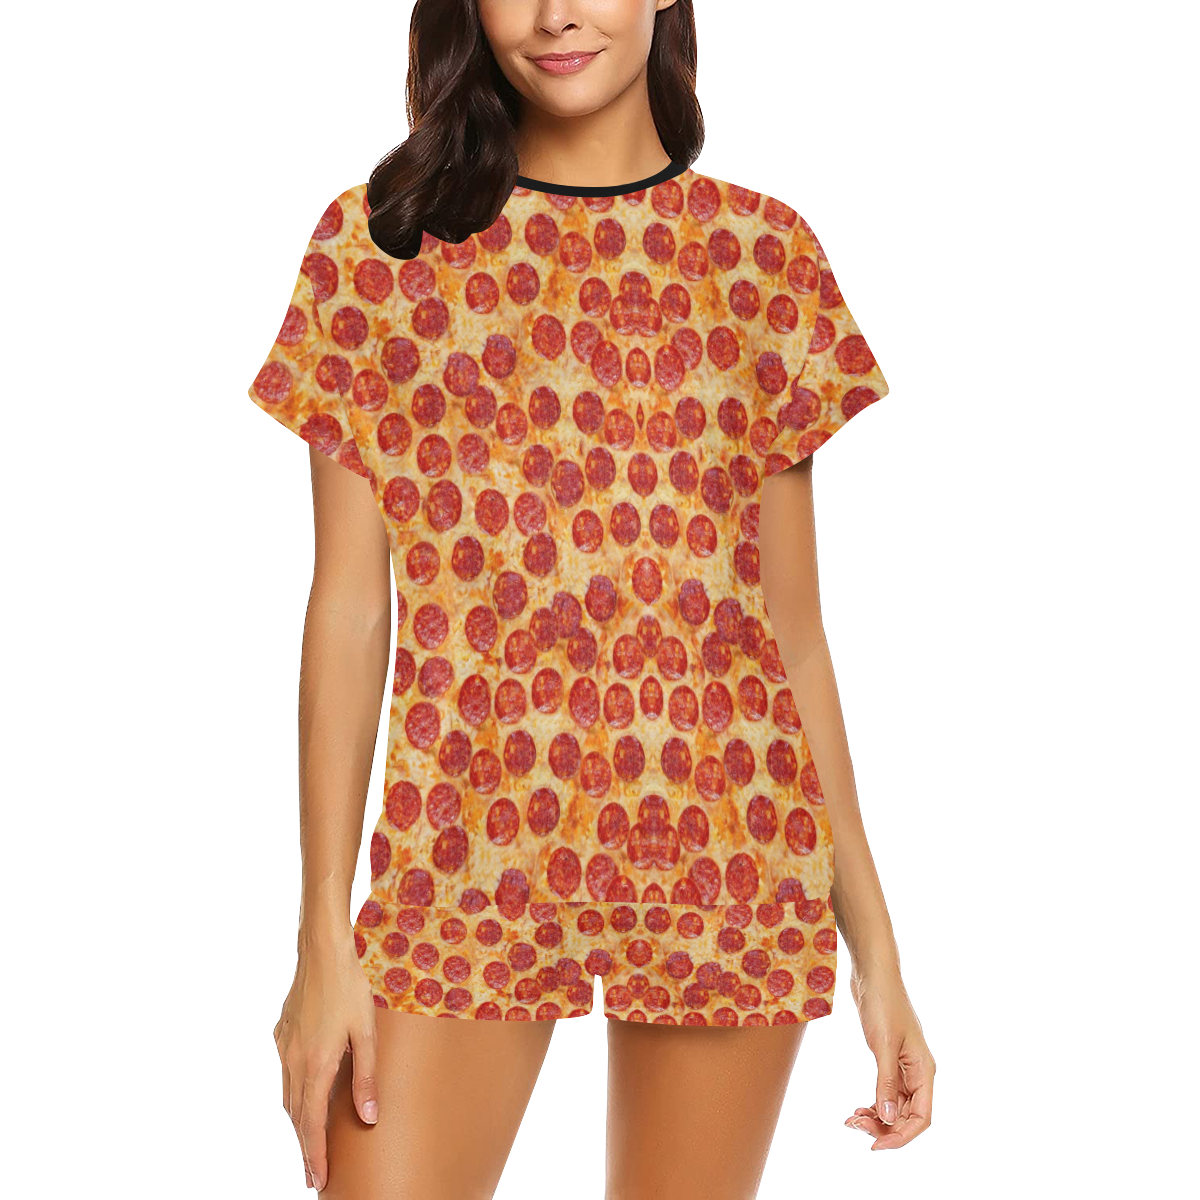 Salami Pizza by Artdreamer Women's Short Pajama Set